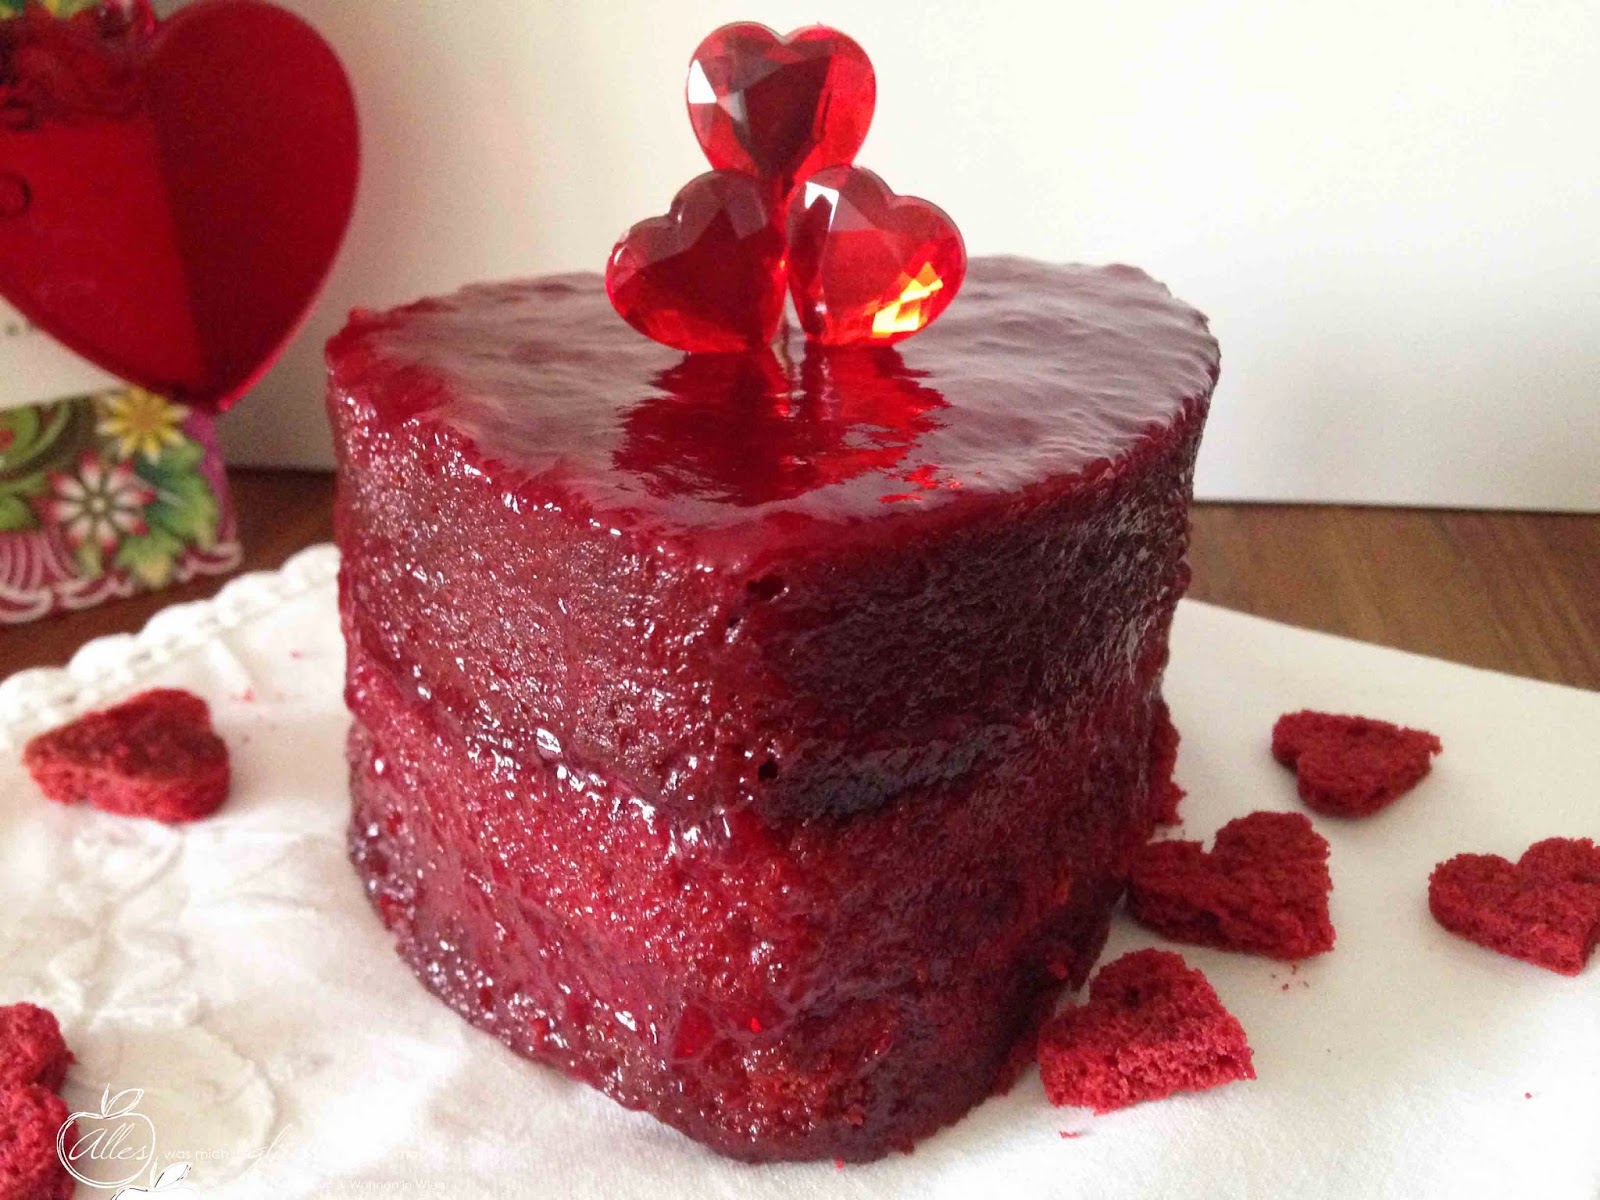 Red Velvet Cake oder simple gesagt “Roter Samt” Herzkuchen